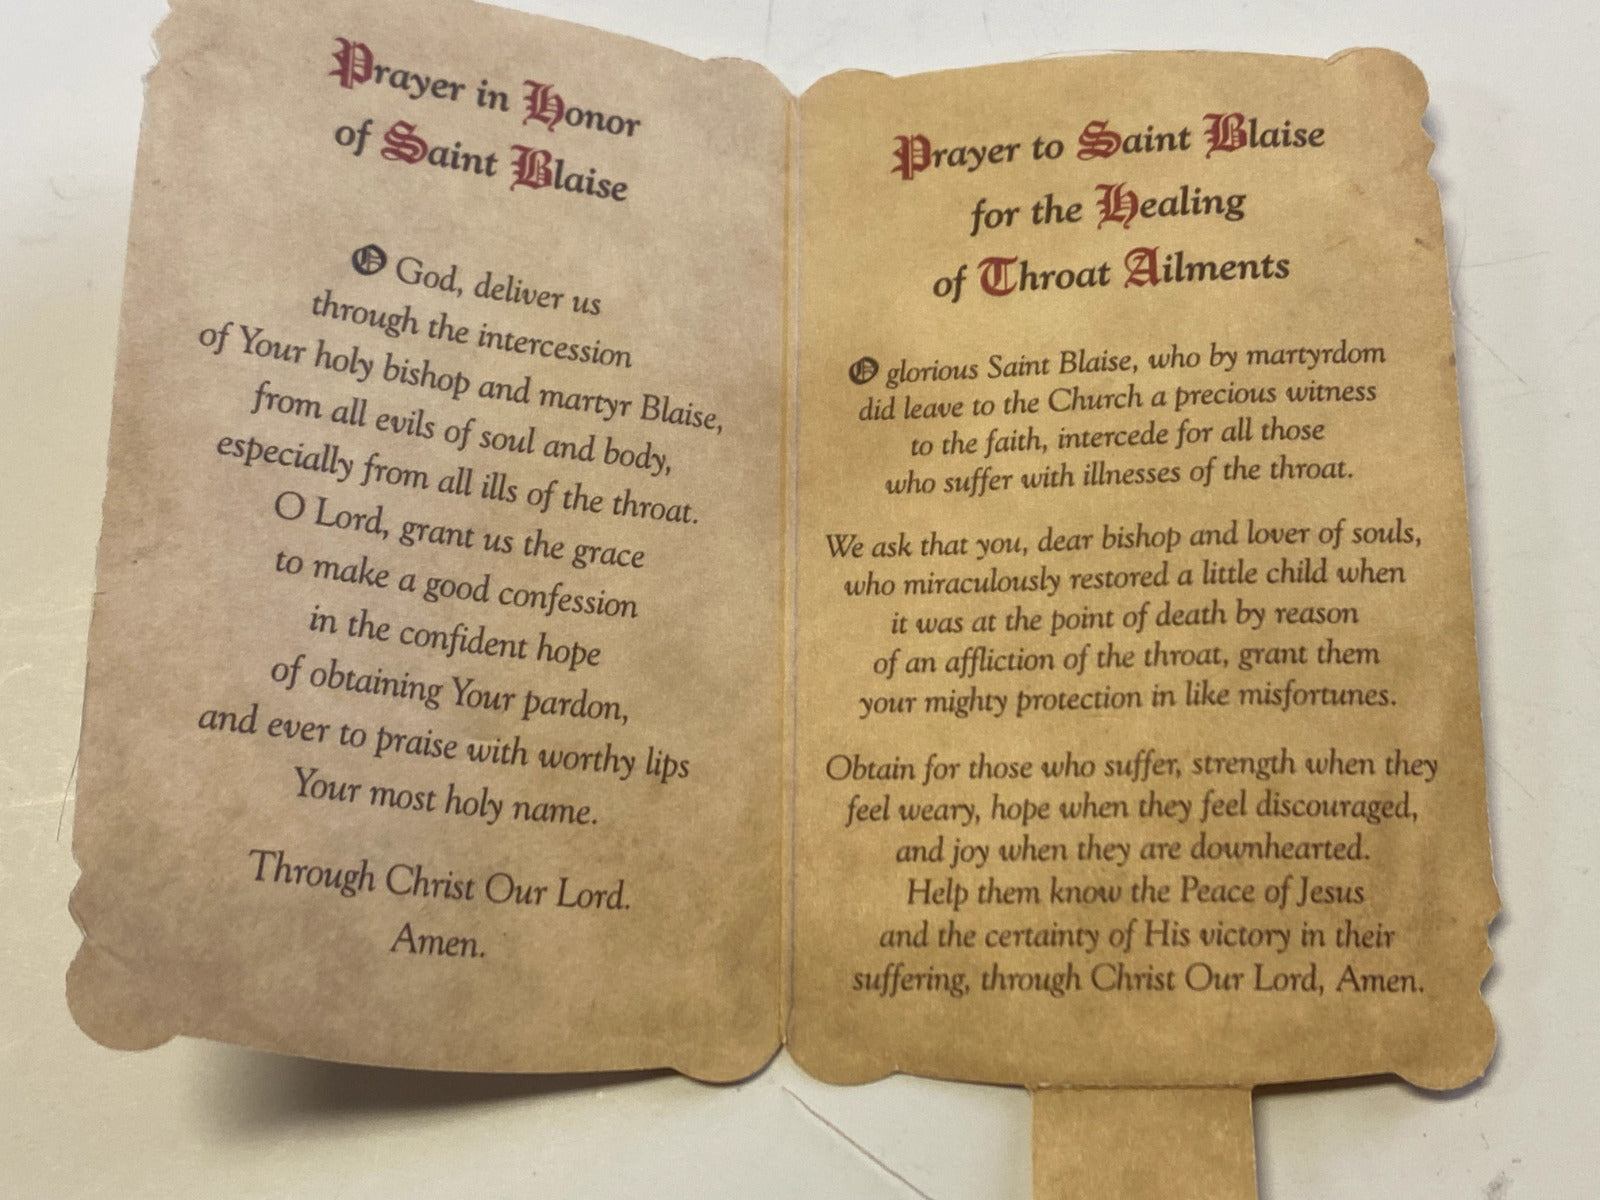 Saint Blaise Prayer folder + Medal, New - Bob and Penny Lord